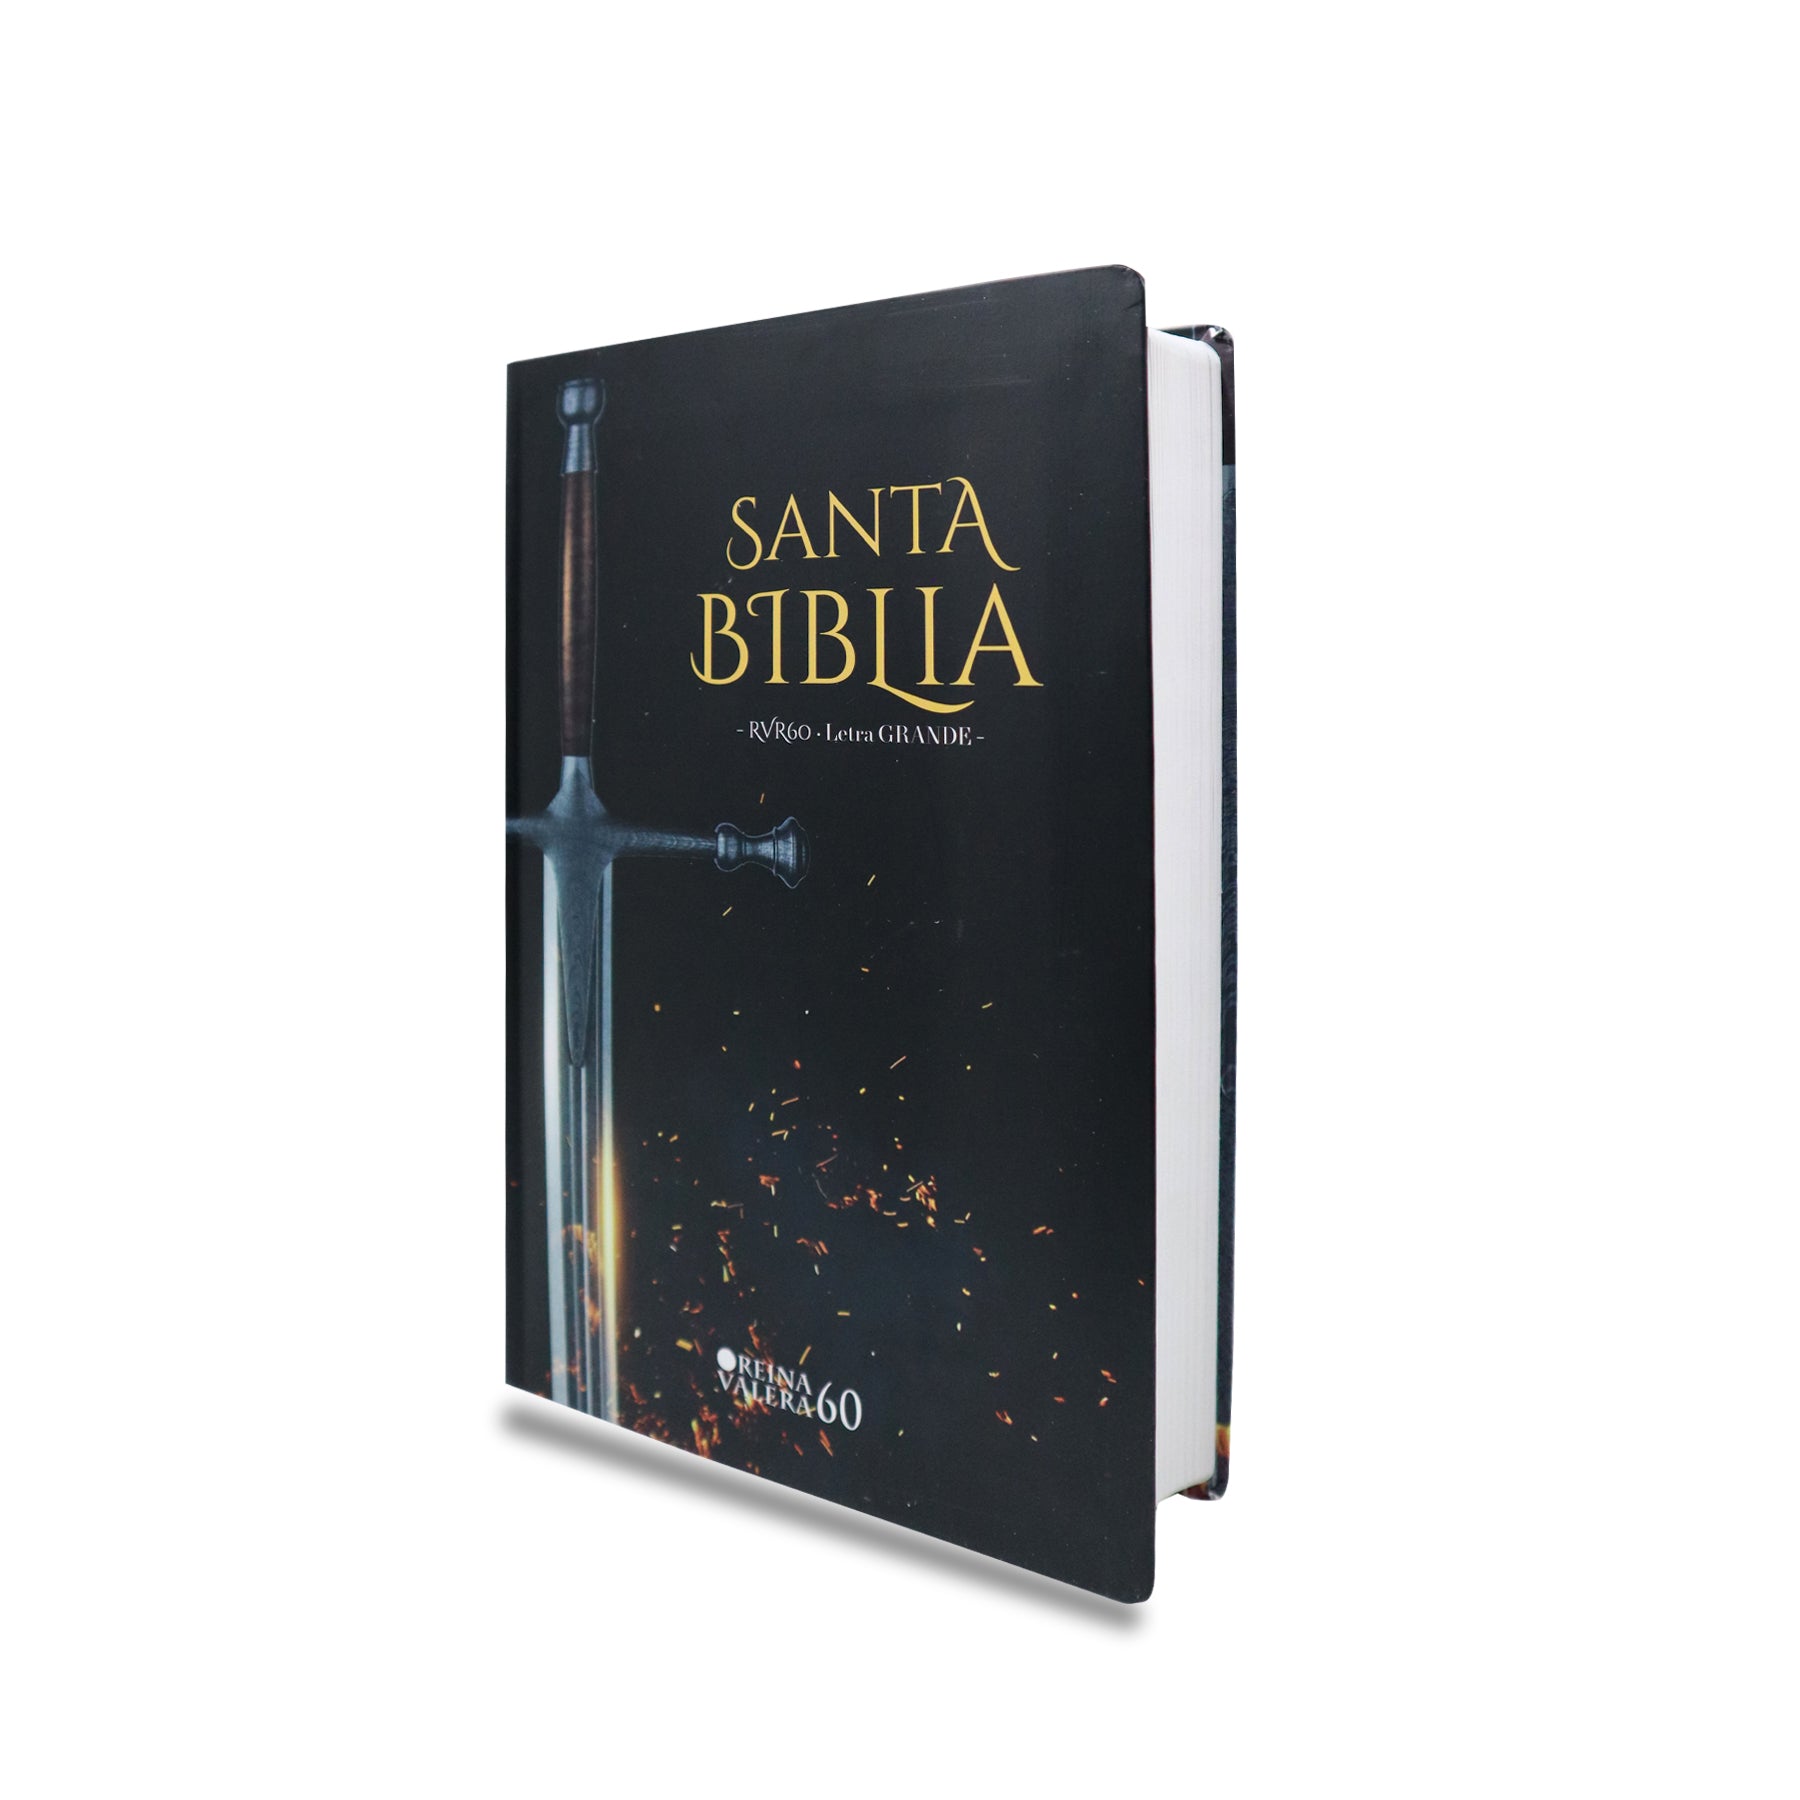 SANTA BIBLIA REINA VALERA 1960 TAMAÑO MANUAL LETRA GRANDE/ESPADA